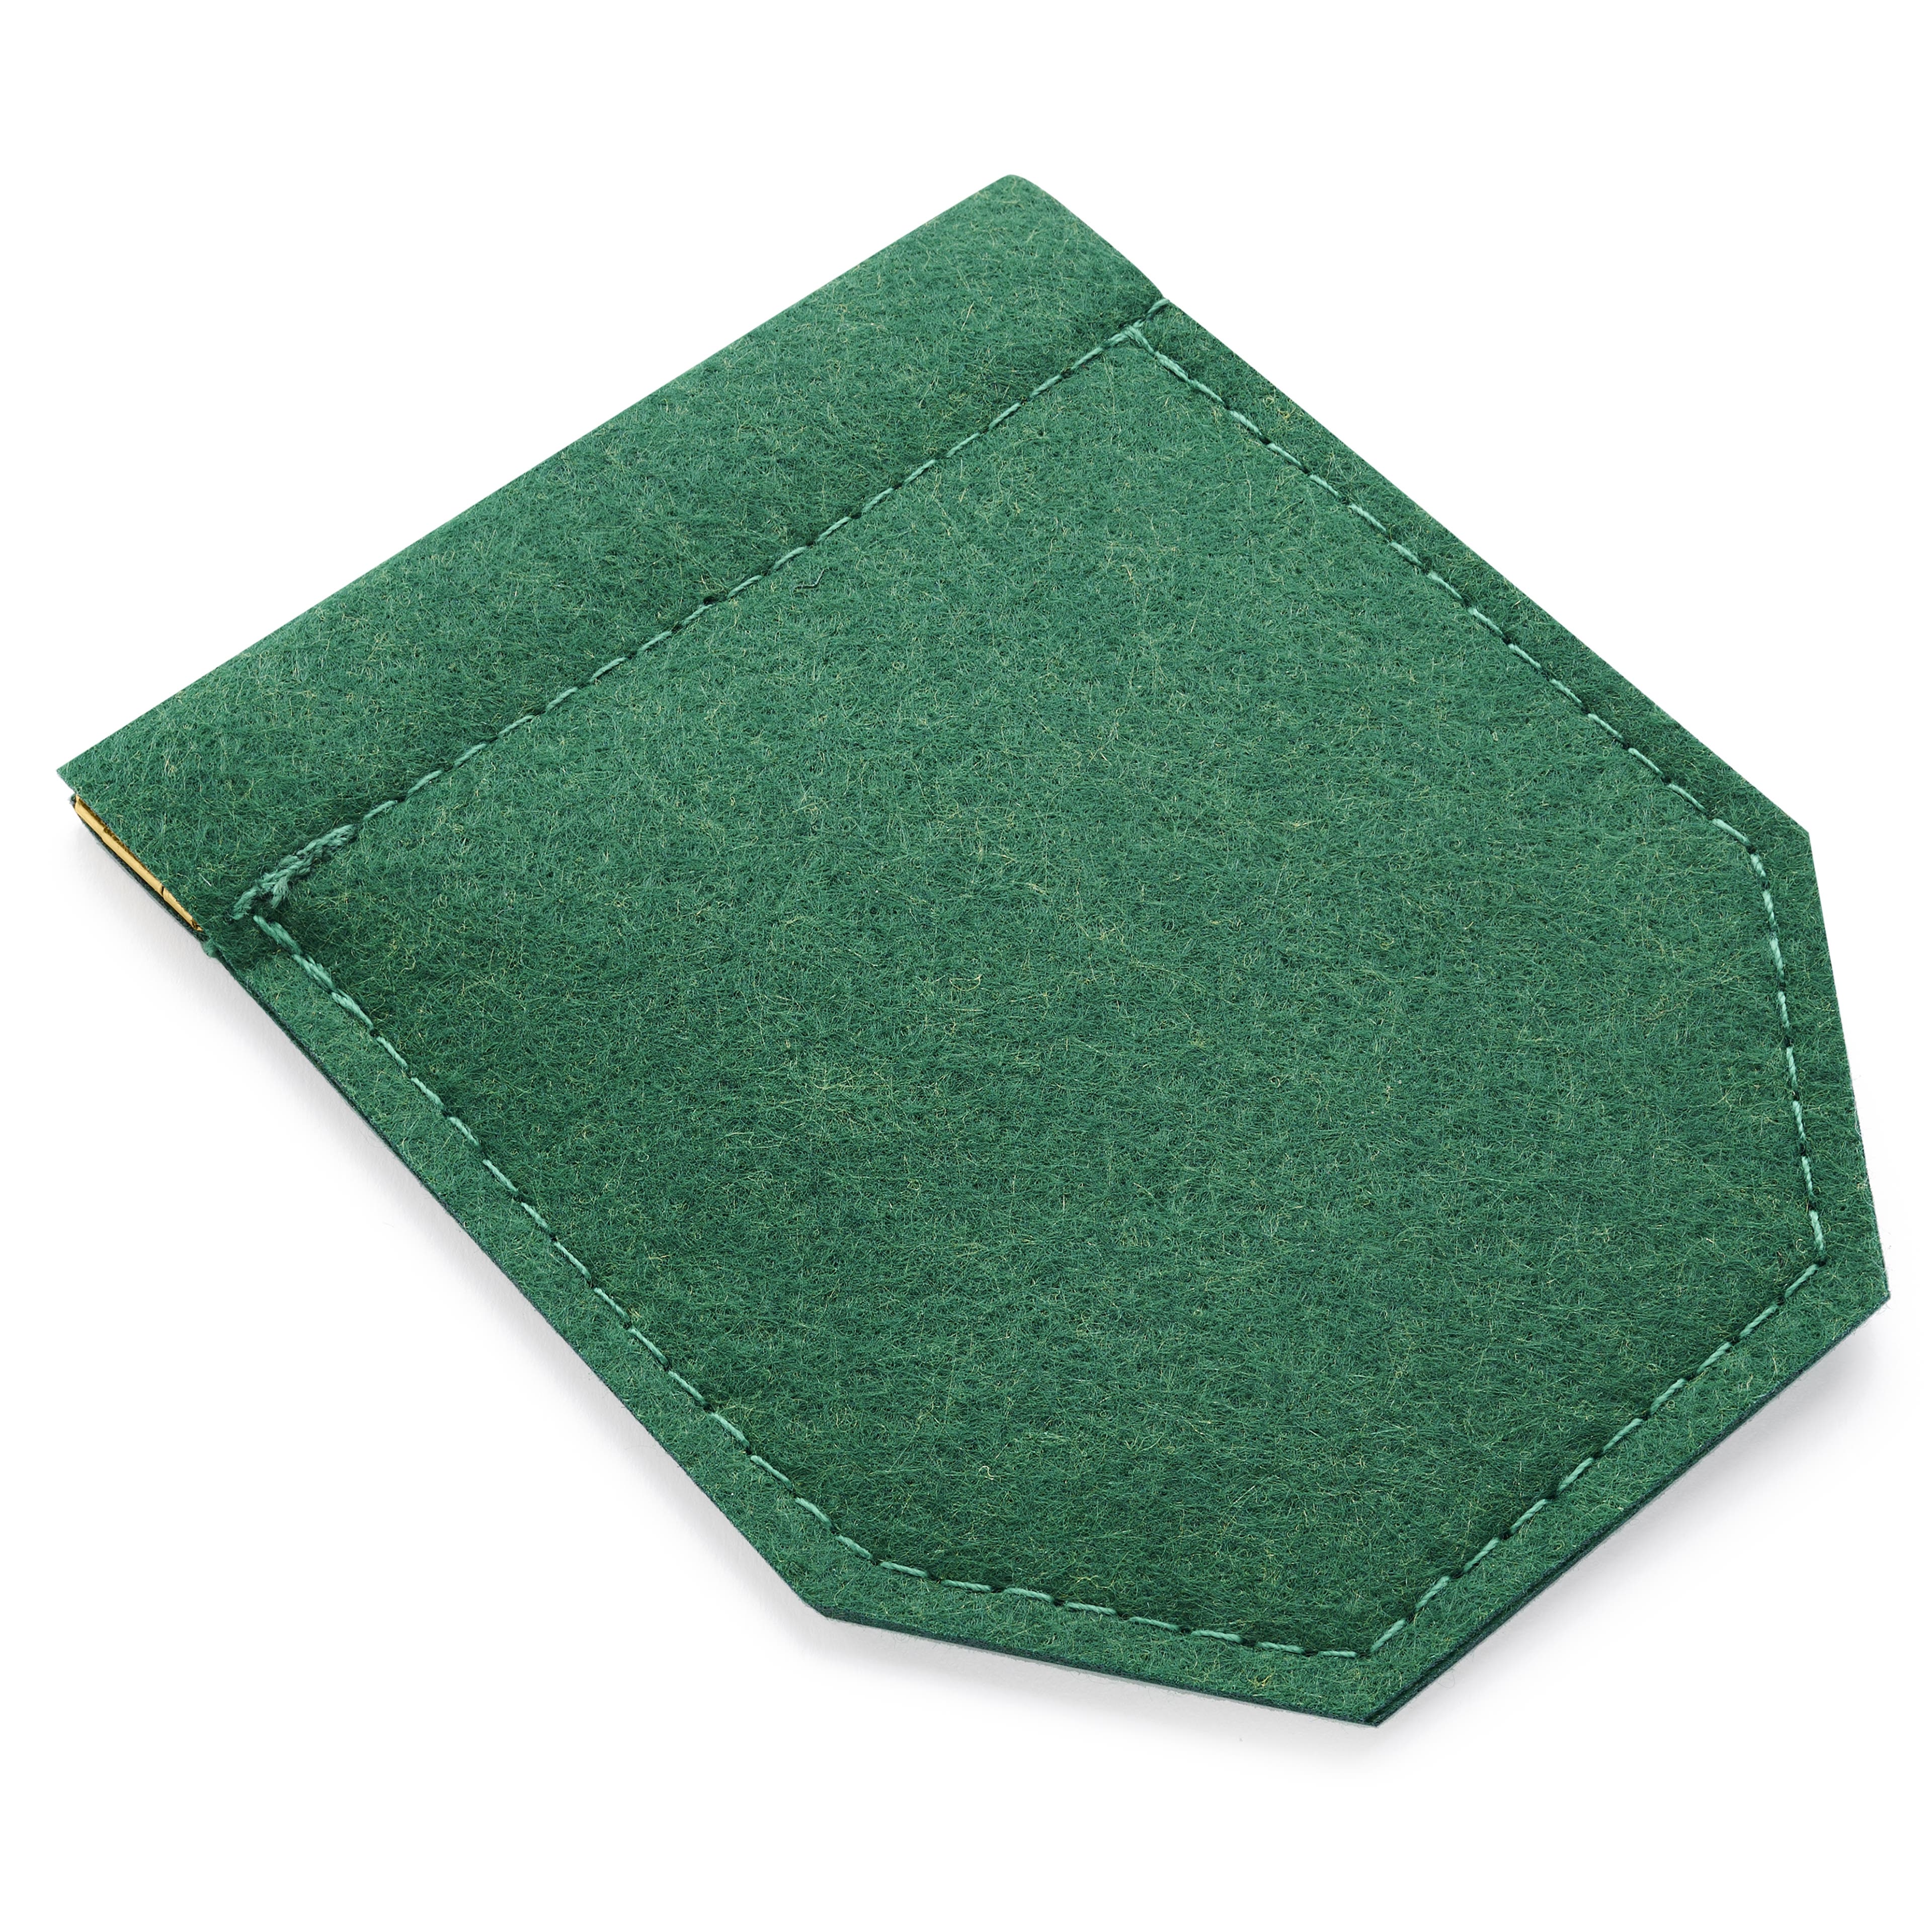 Green Felt Pocket Square Holder